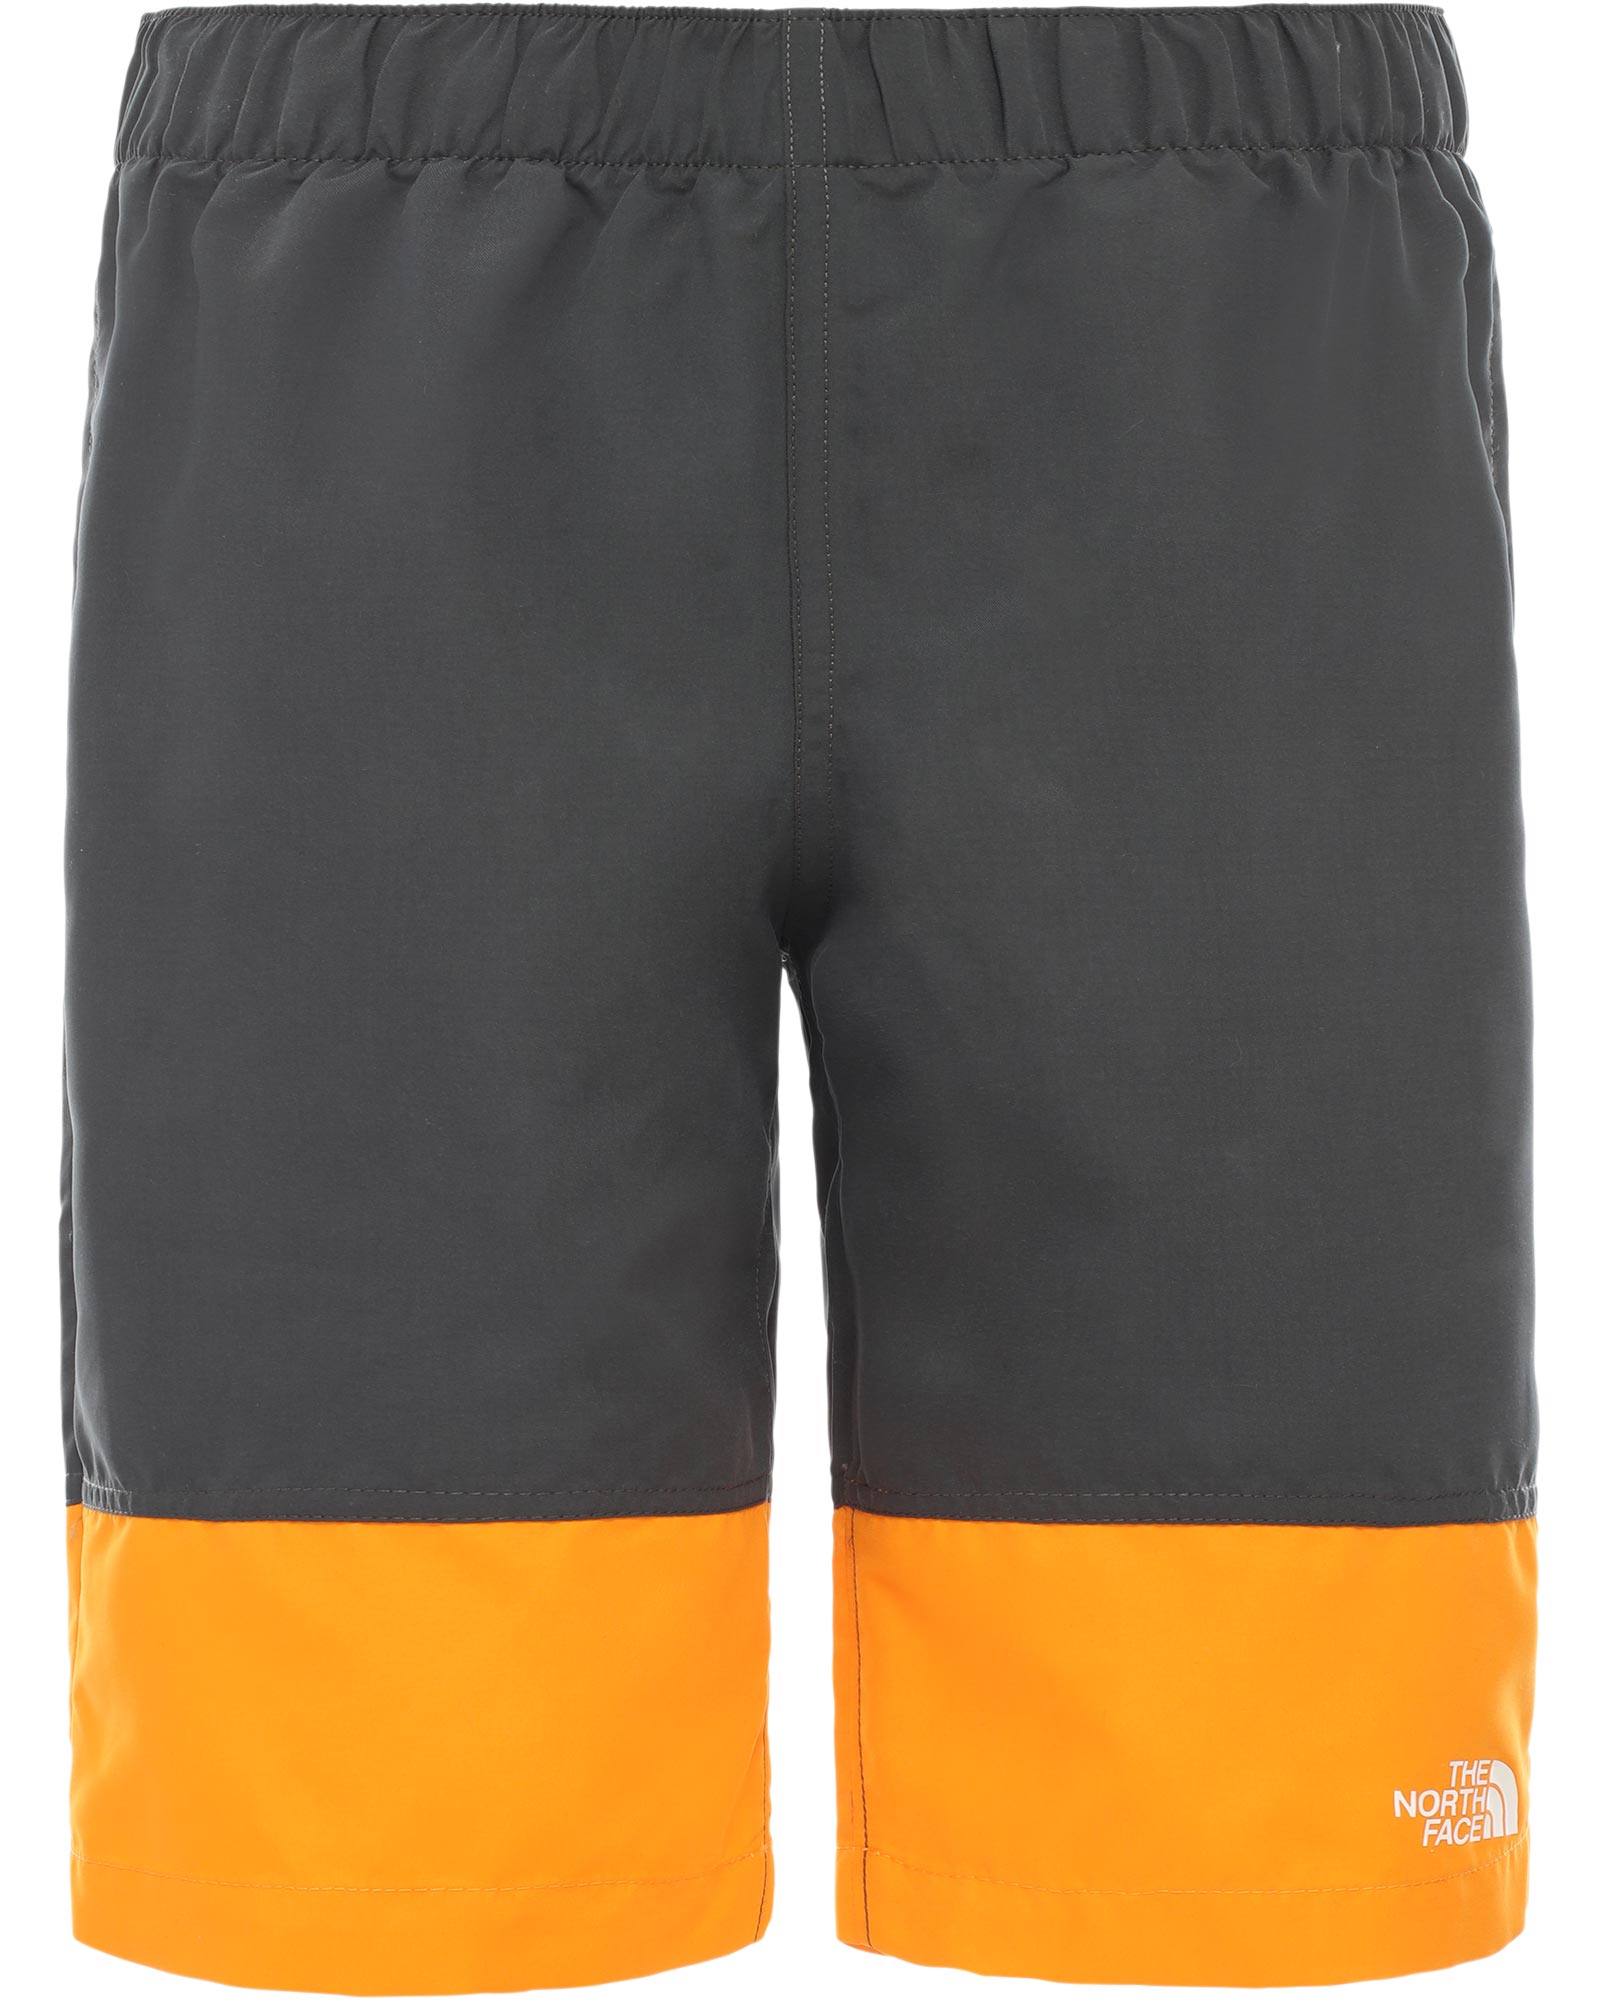 The North Face Class V Water Boys’ Shorts - Asphalt Grey L